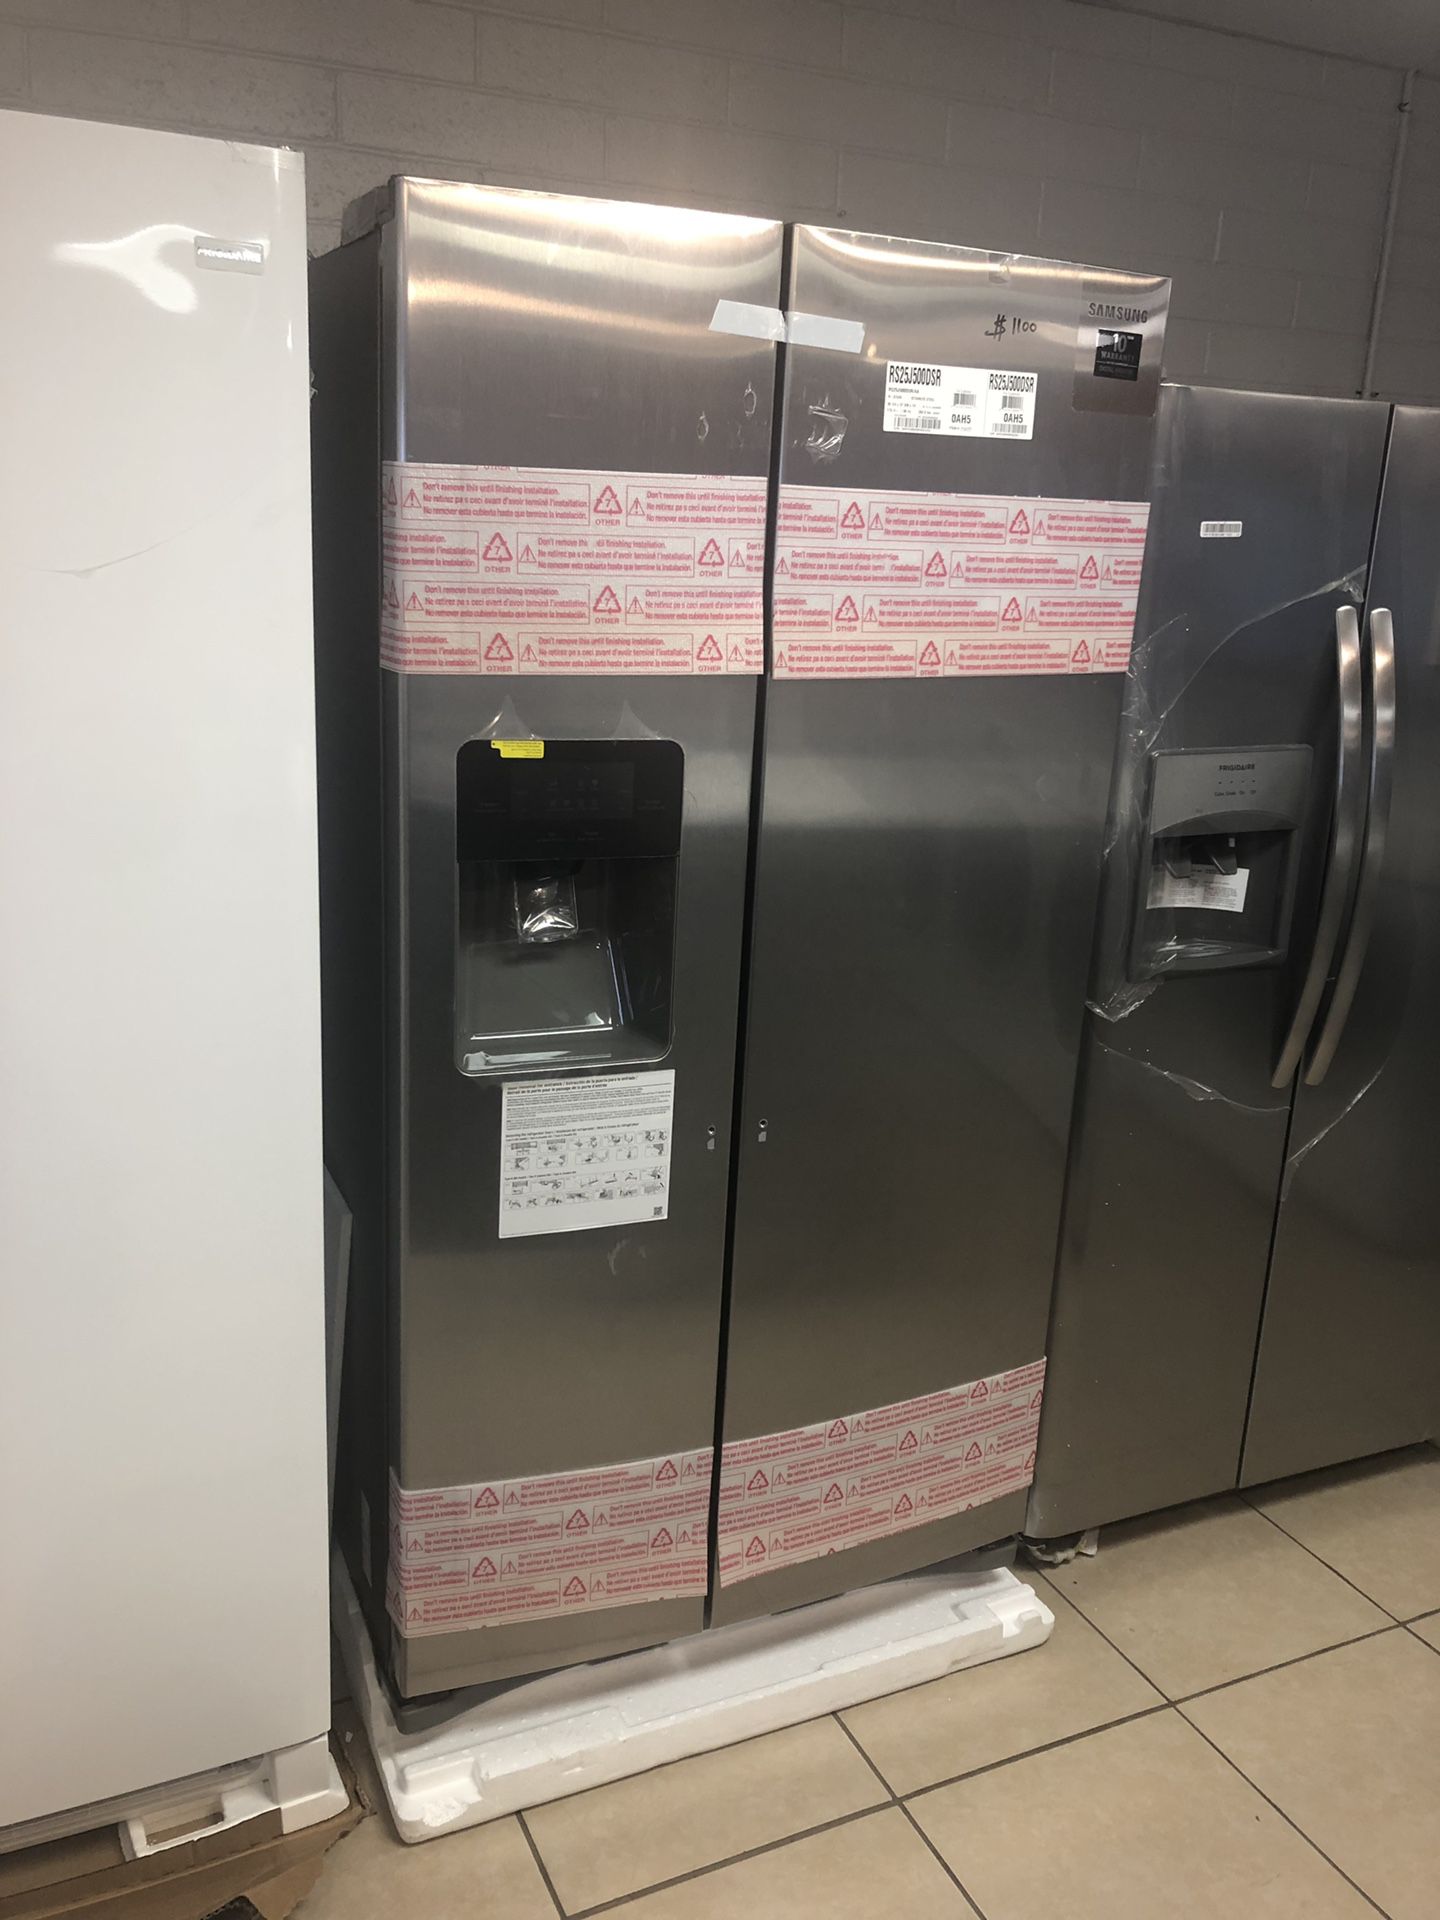 NEW Samsung refrigerator for sale!!